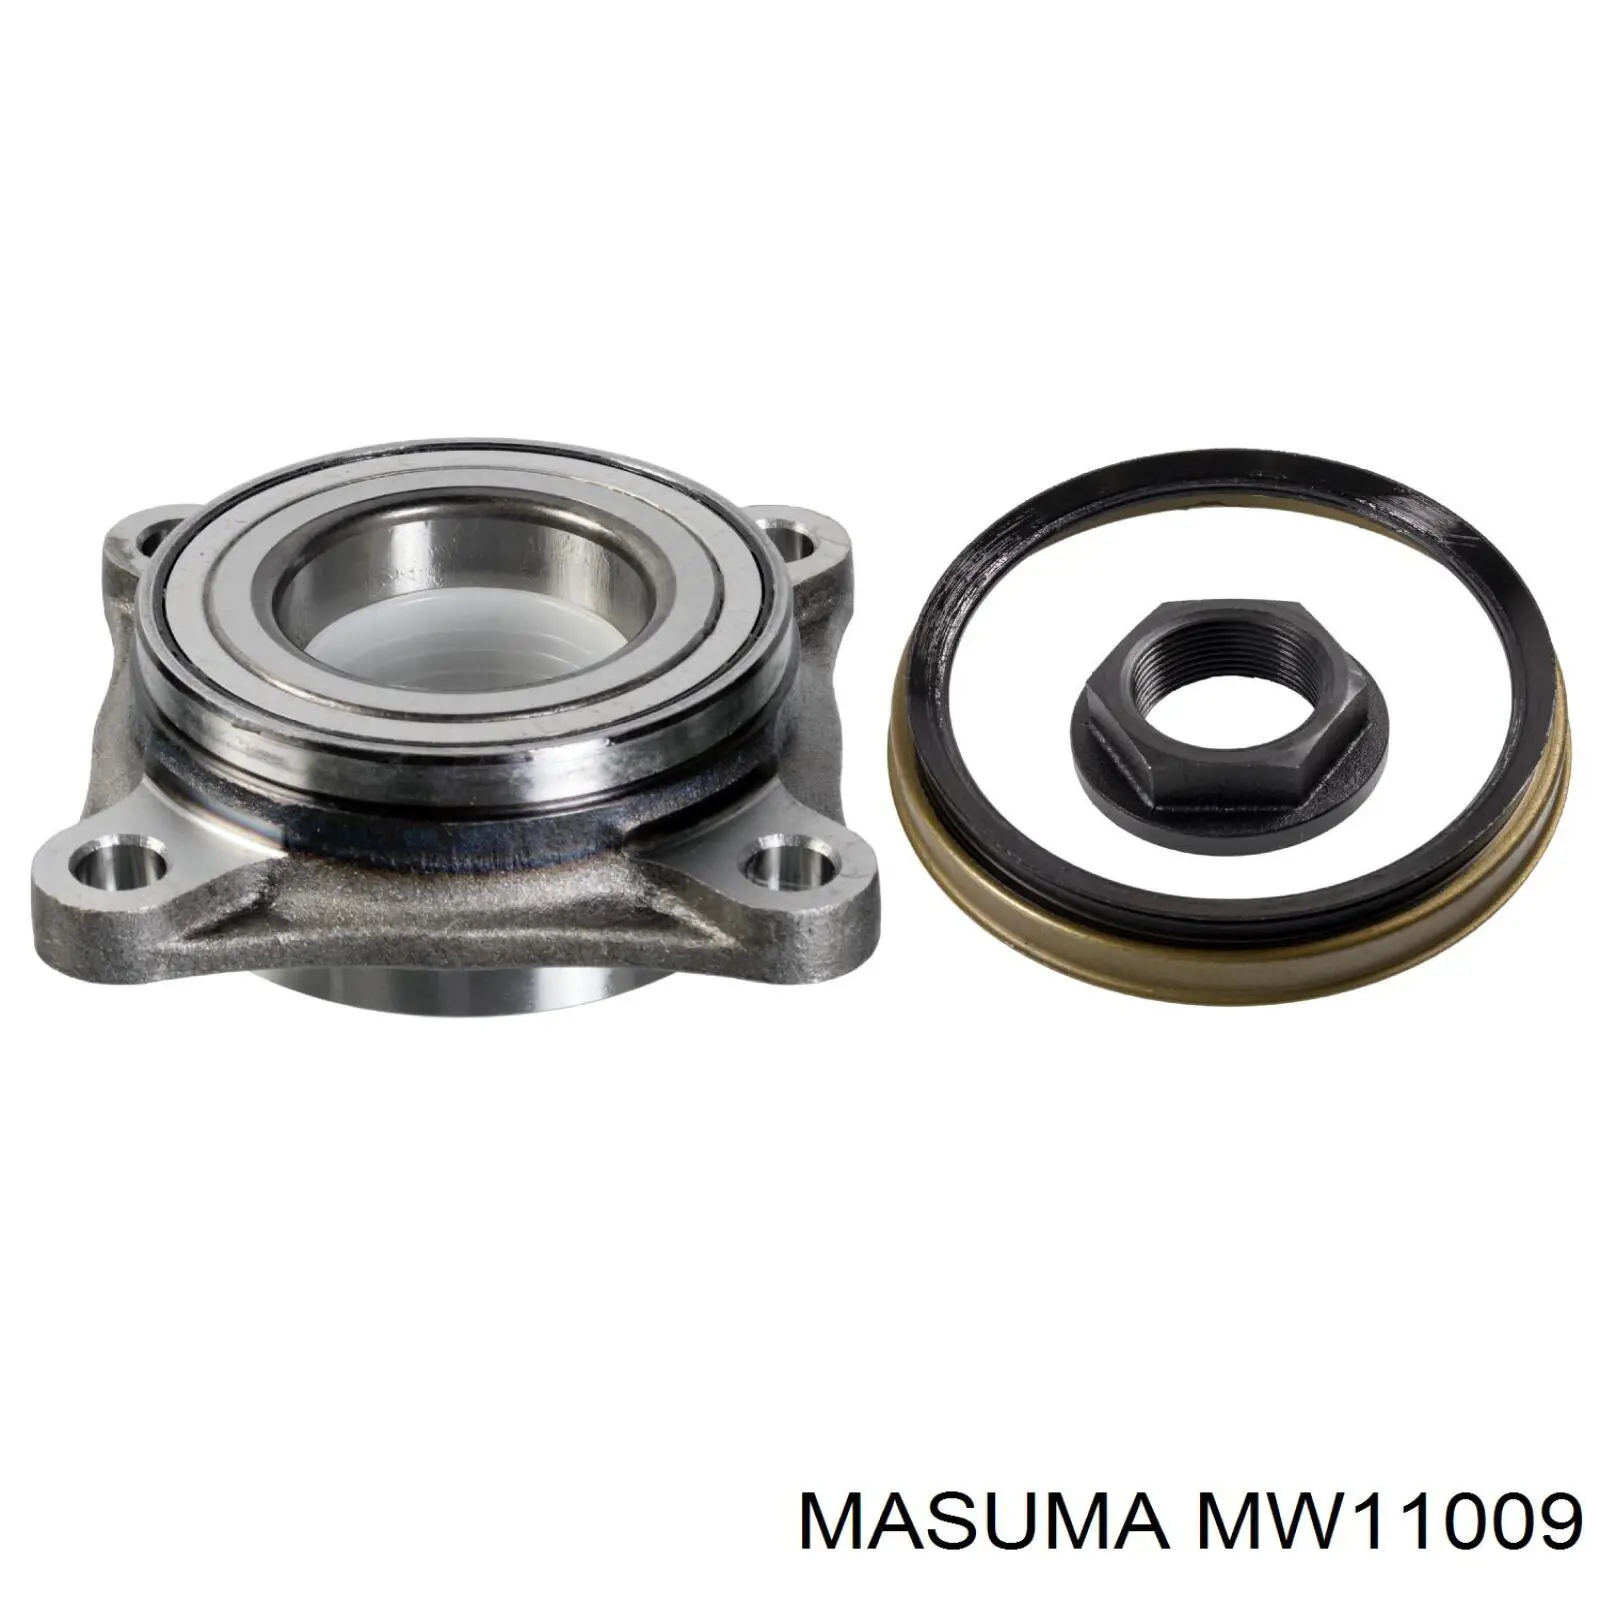 MW11009 Masuma cojinete de rueda delantero